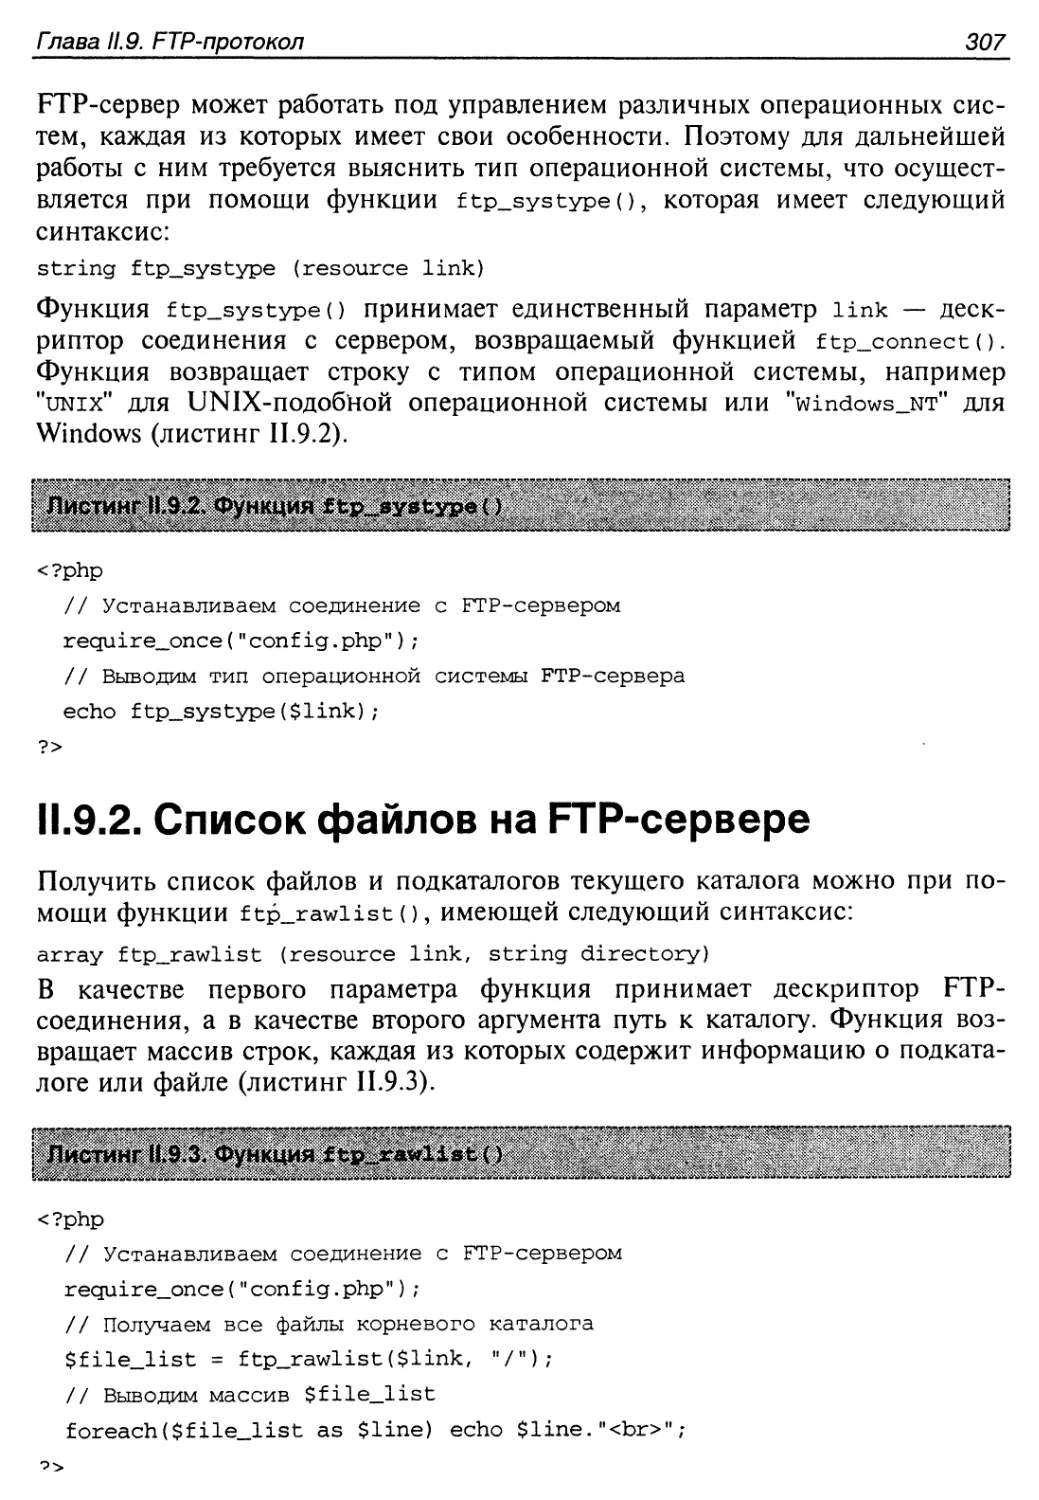 II.9.2. Список файлов на FTP-сервере